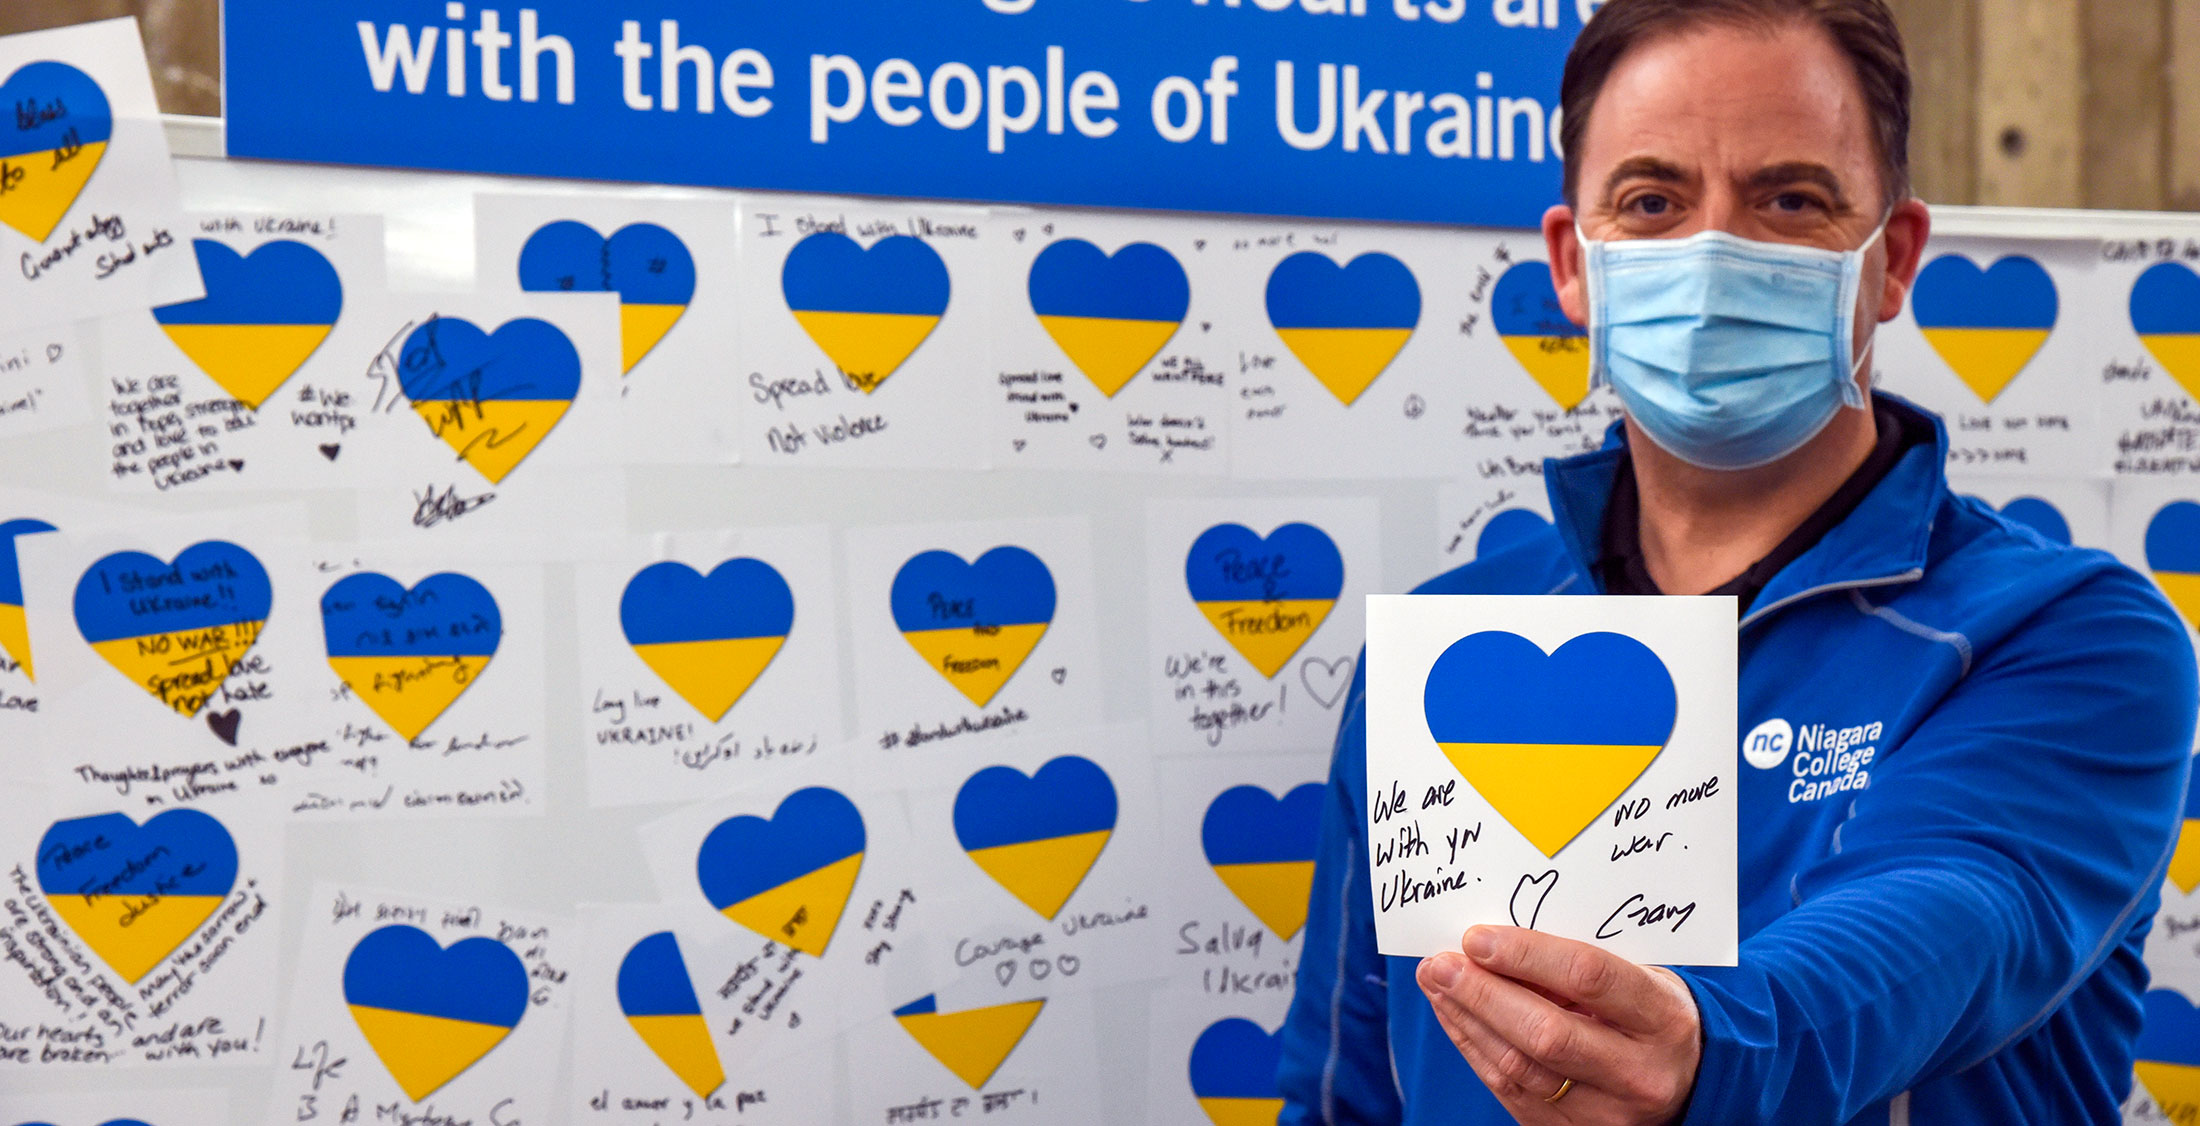 Gary Torraville holding up a Ukraine support heart